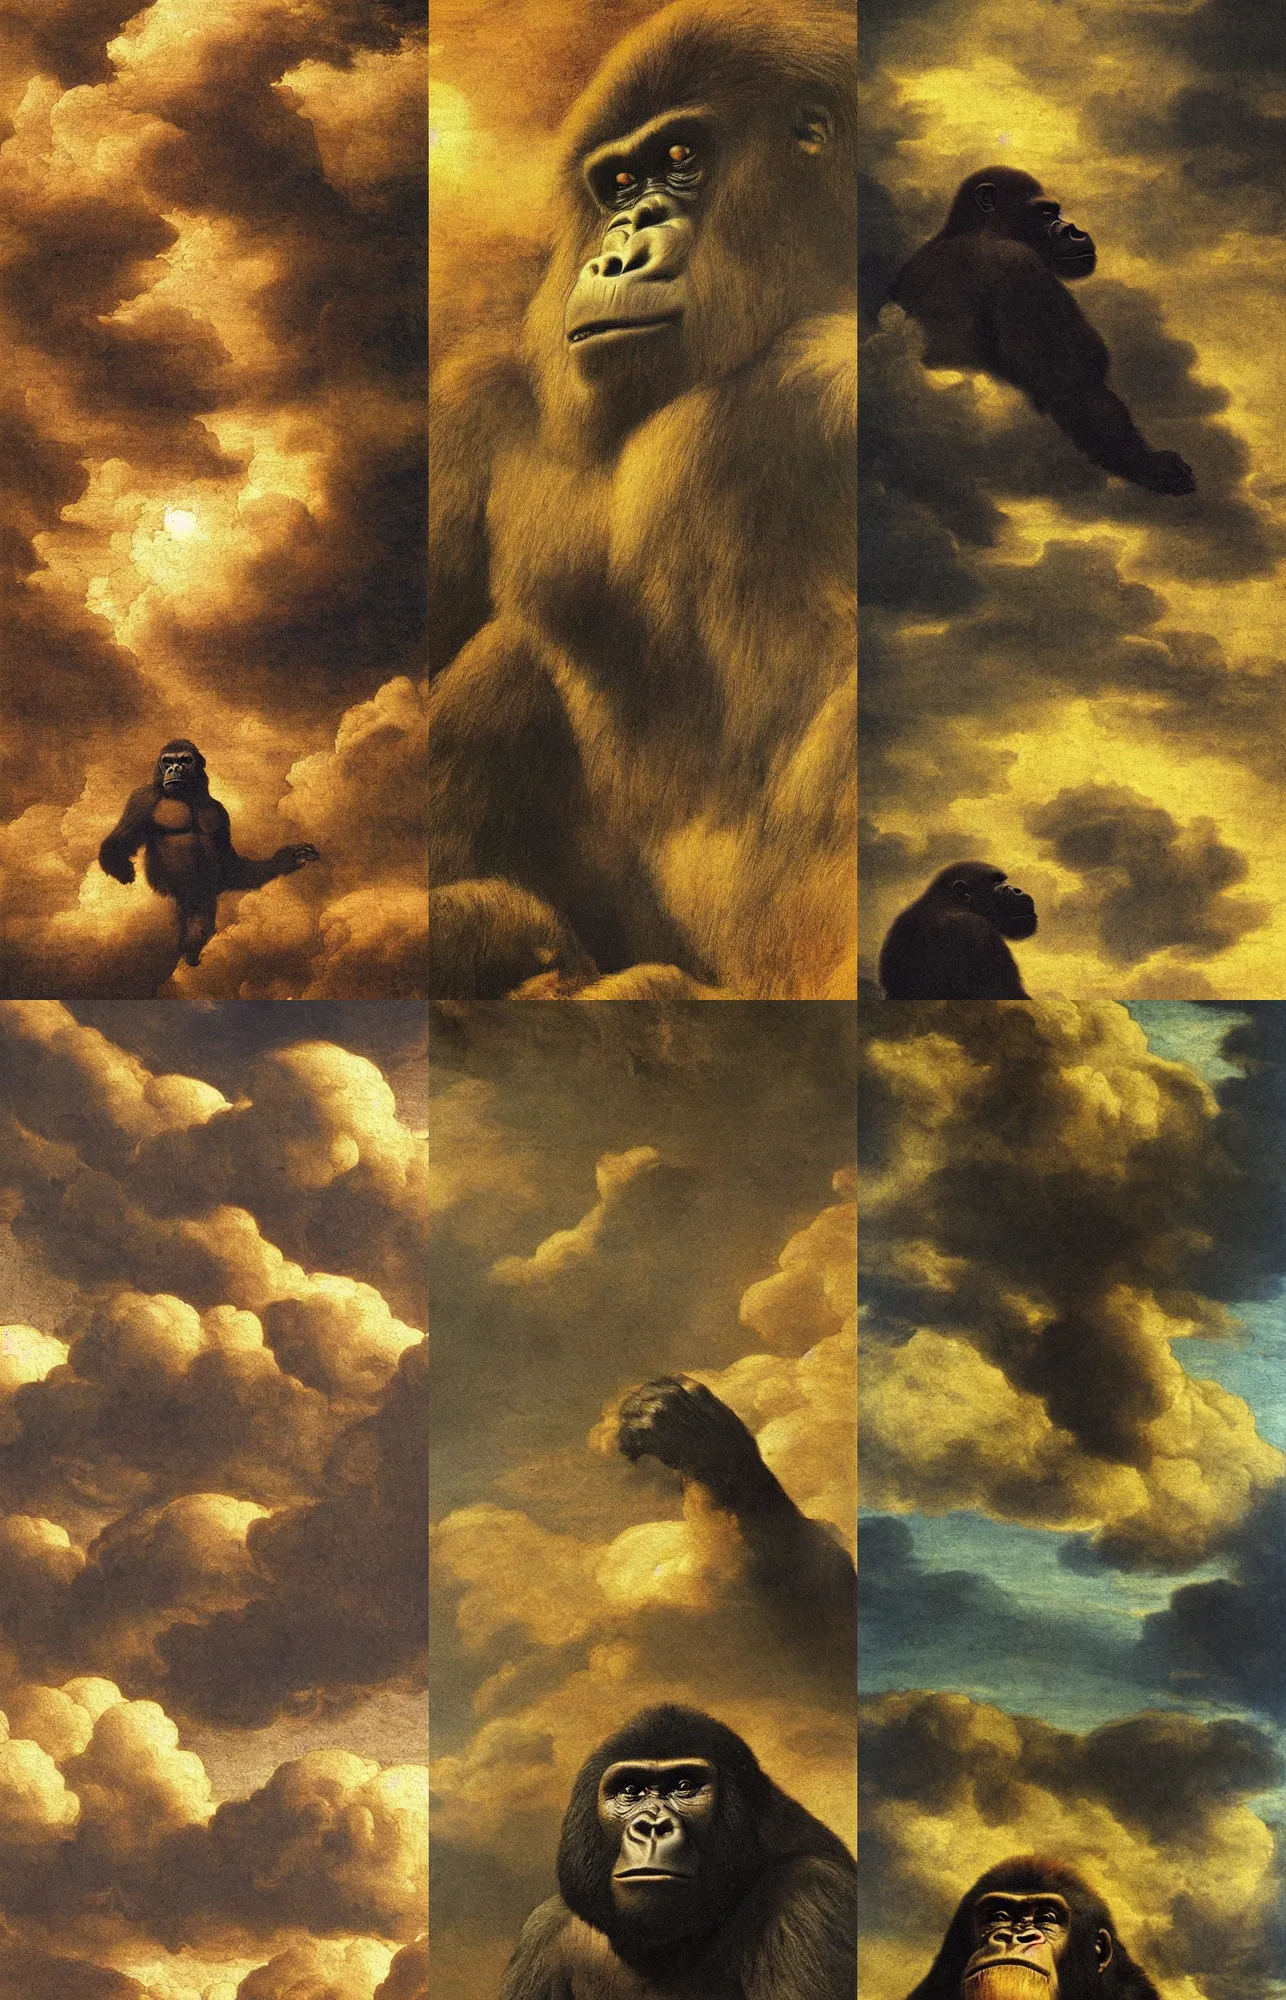 Prompt: gorilla, golden hour, clouds, beautiful painting by leonardo da vinci, amoled wallpaper